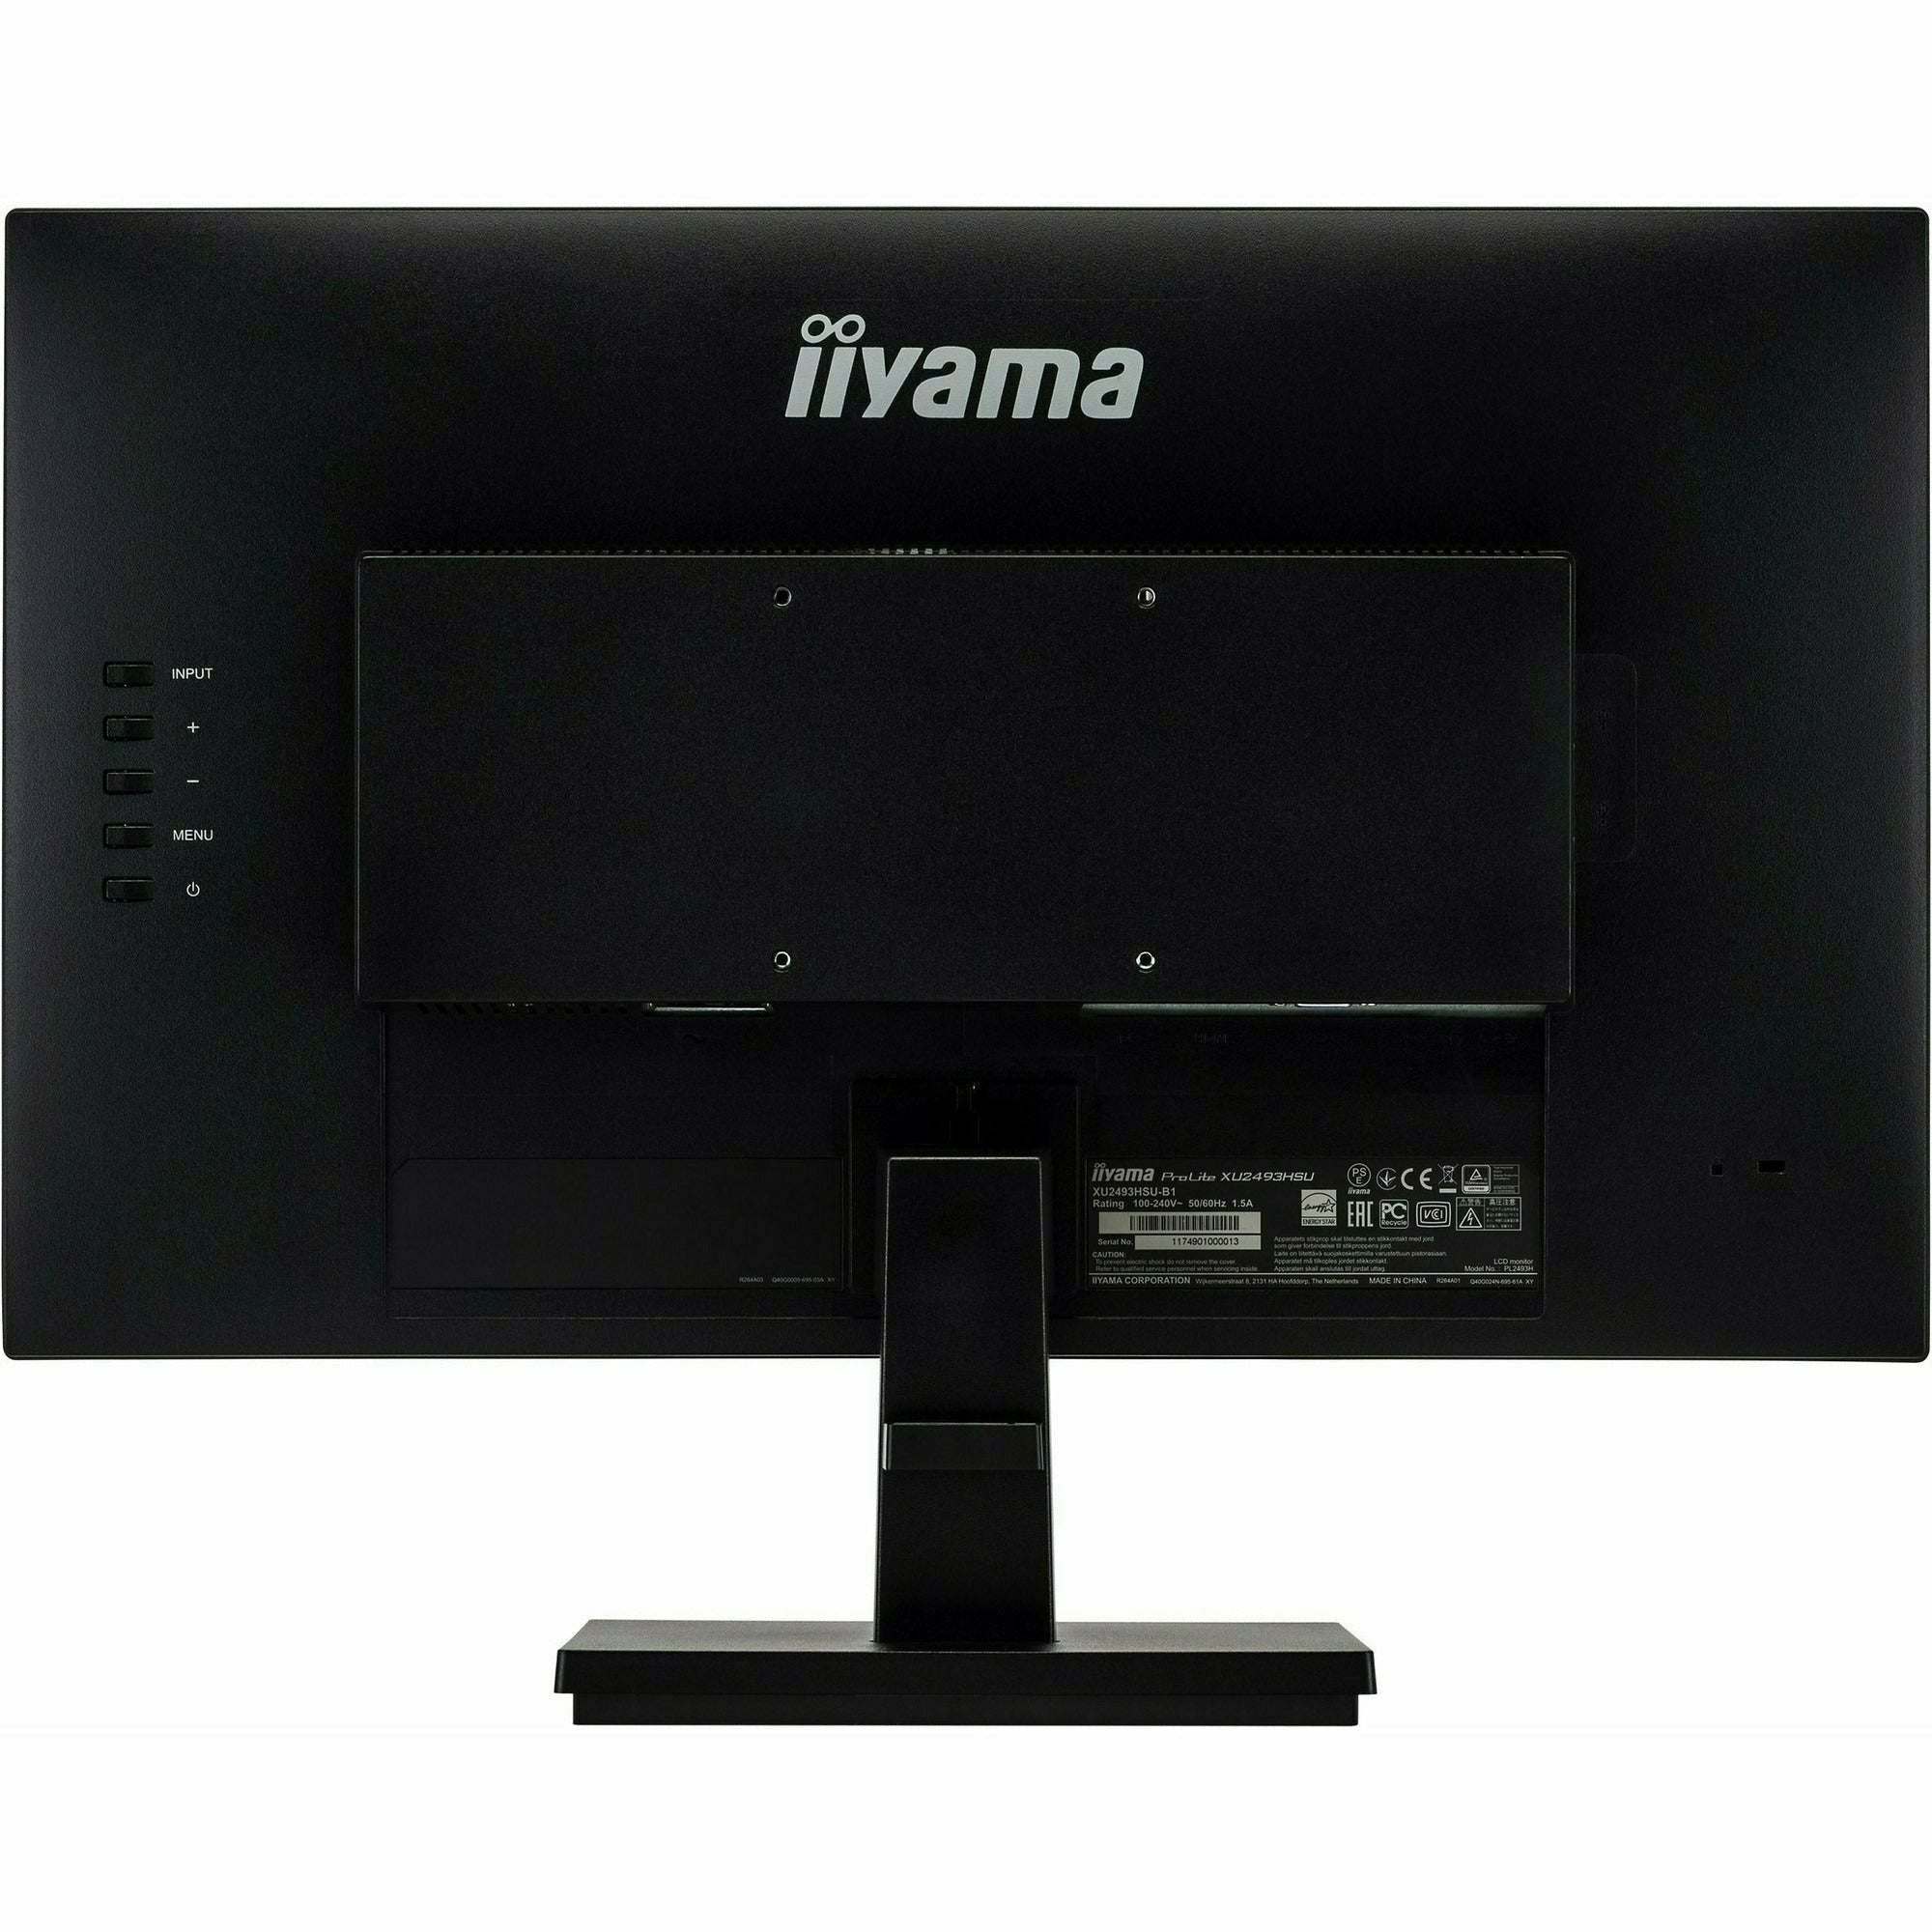 iiyama ProLite XU2493HSU-B1 22" IPS LCD Monitor